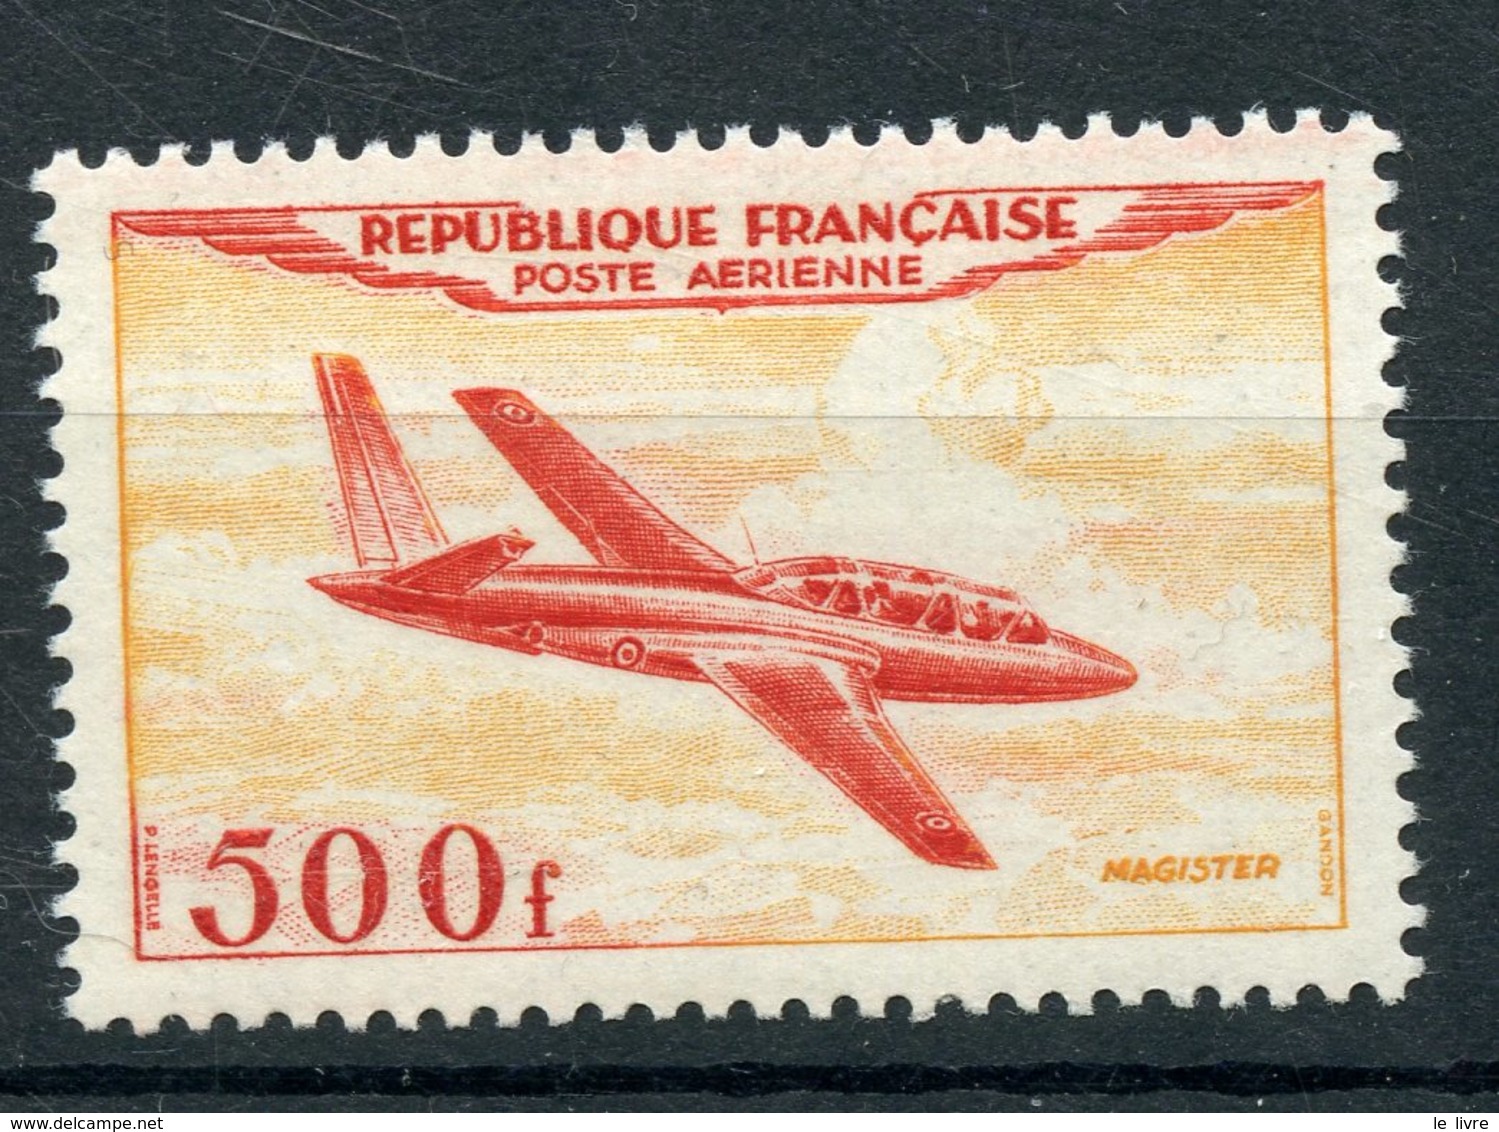 TIMBRE FRANCE N° 32 POSTE AERIENNE AVIATION 500 FRANCS MAGISTER de France